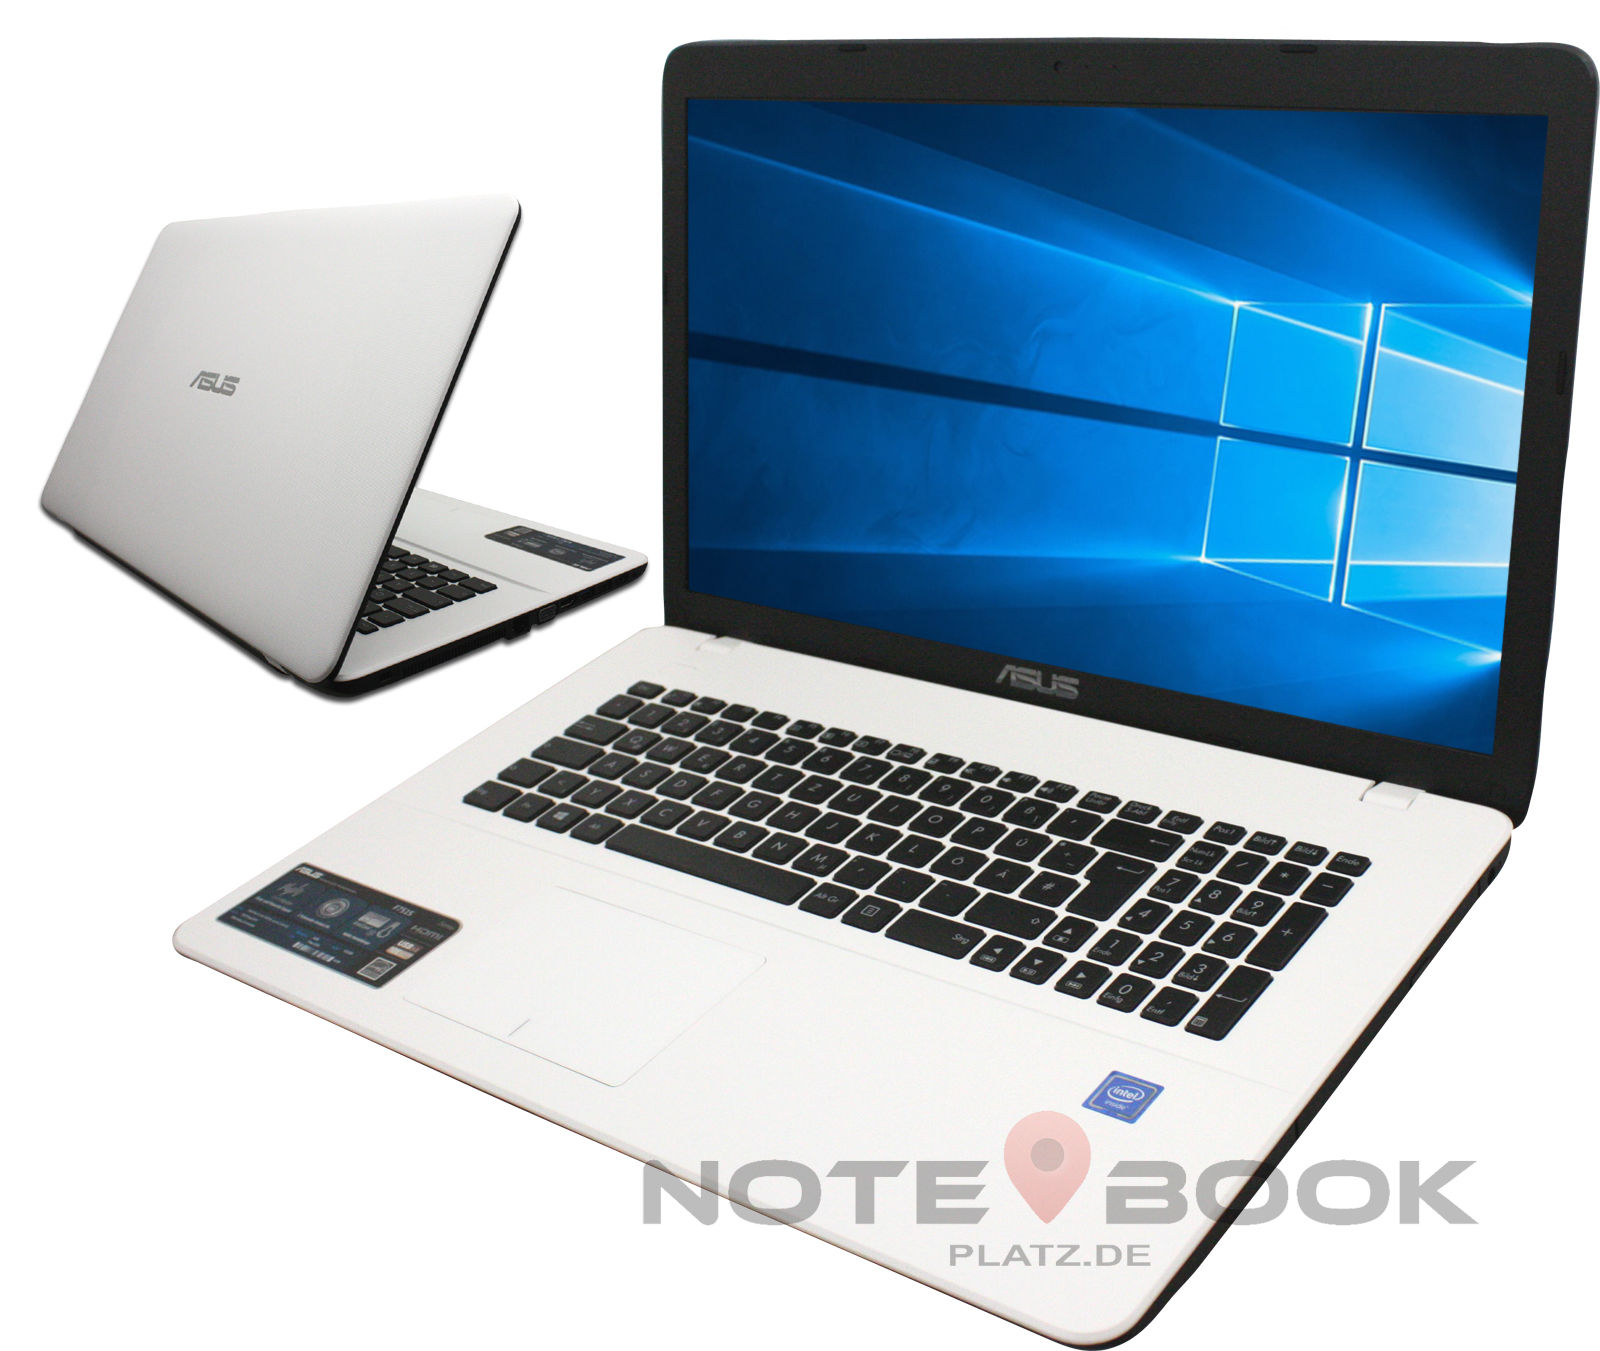 ASUS Notebook 17 Zoll - Weiß - 2 x 2,46 GHz - 1T HDD - USB 3.0 - Win10 Pro- WLAN